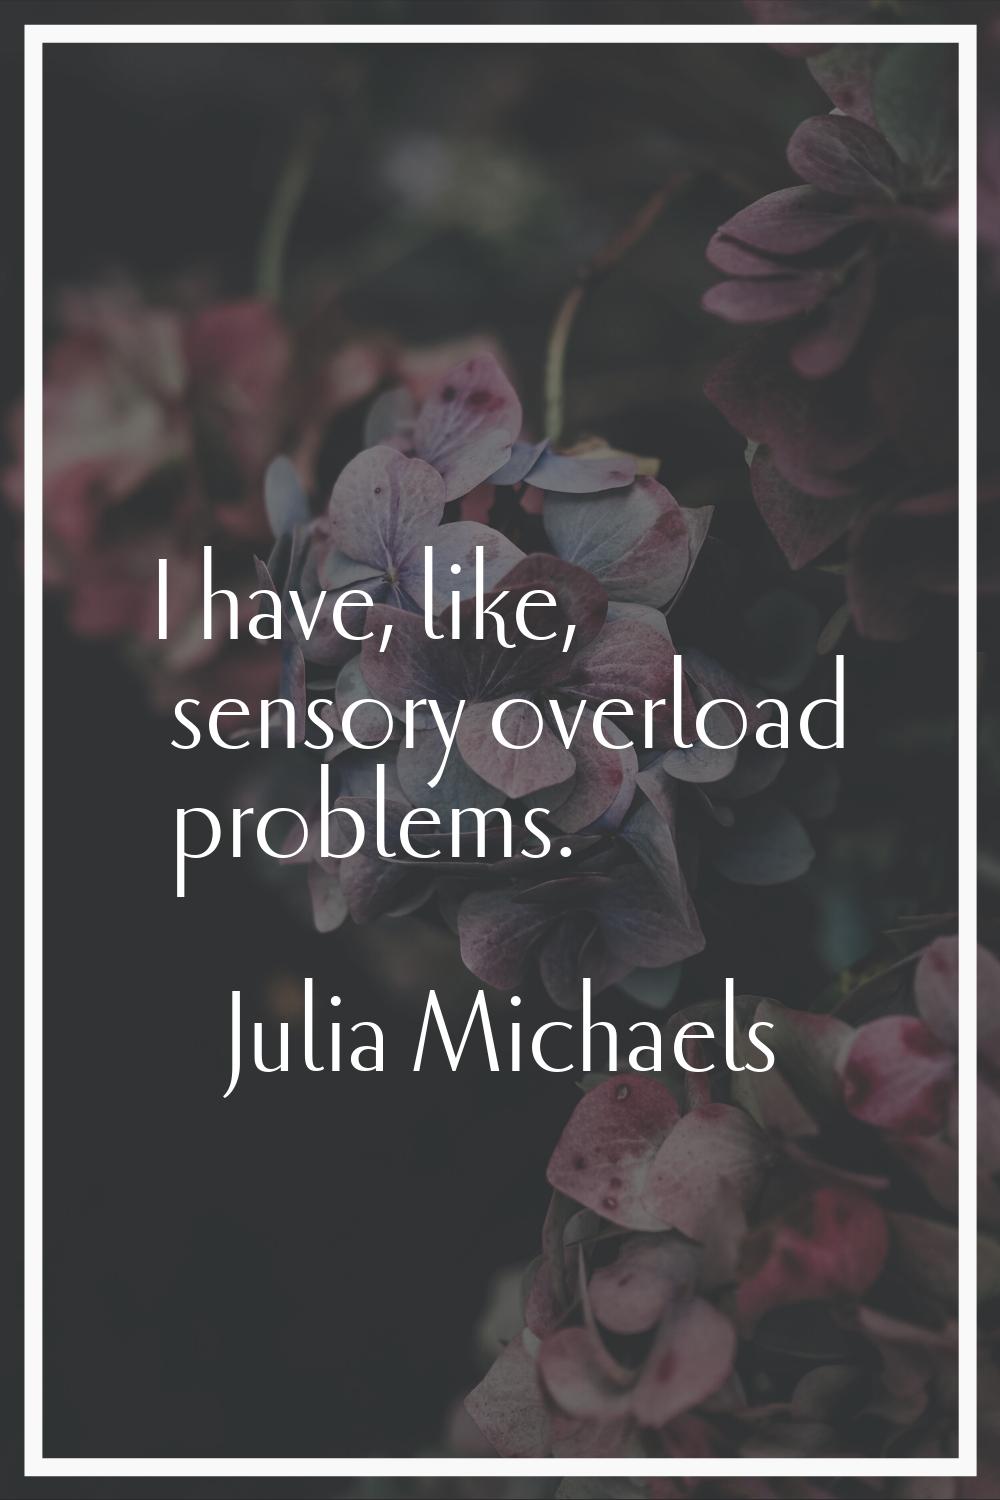 I have, like, sensory overload problems.